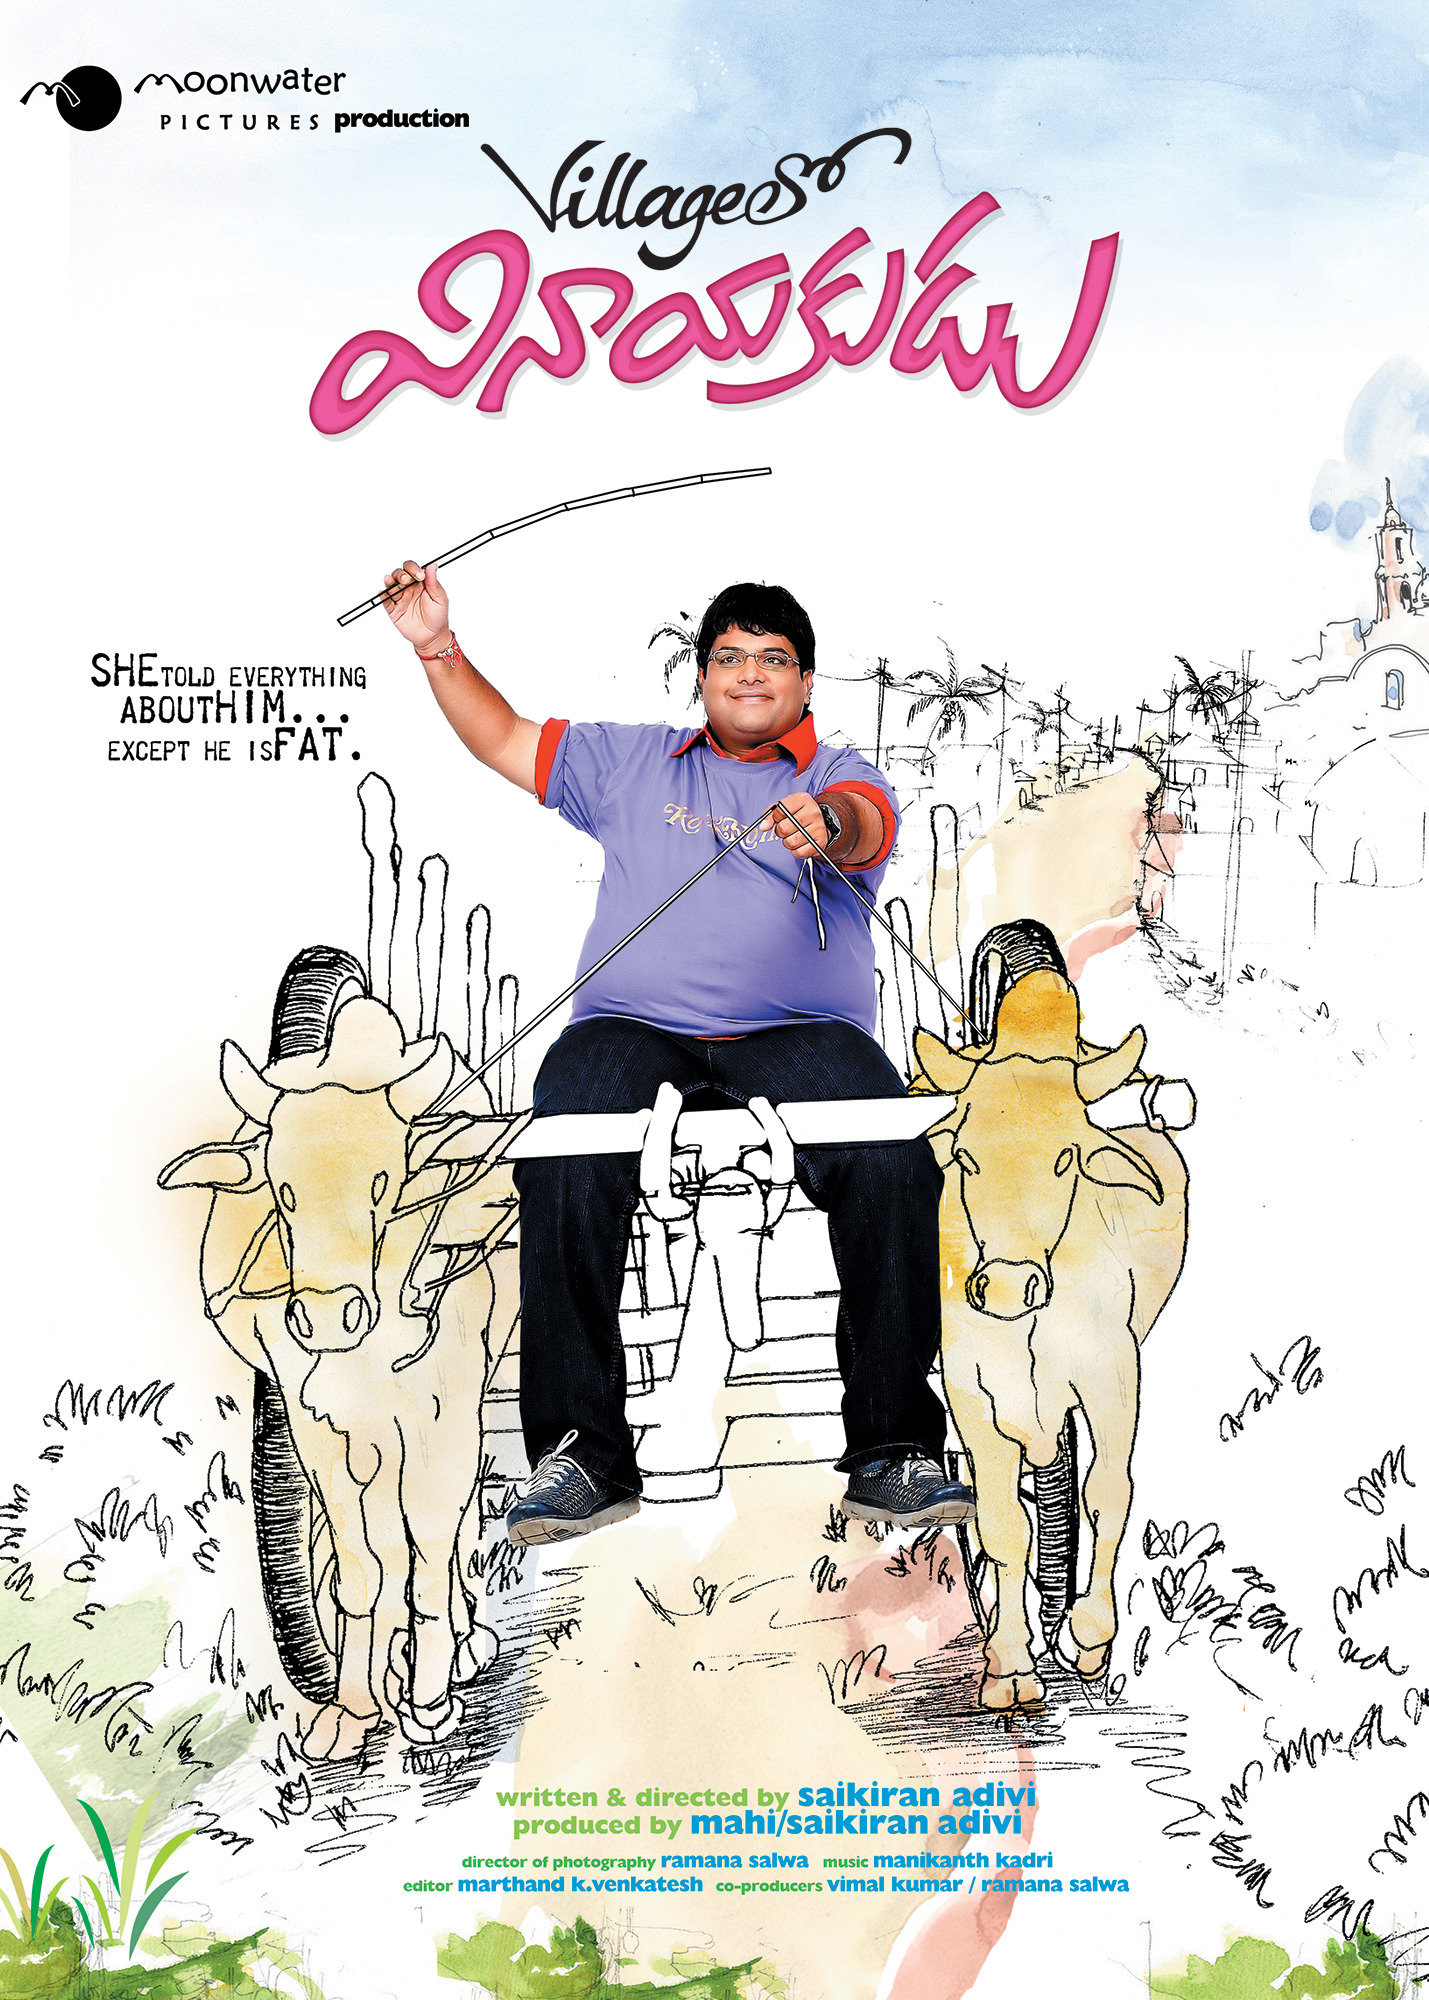 Mega Sized Movie Poster Image for Village lo Vinayakudu (#8 of 24)